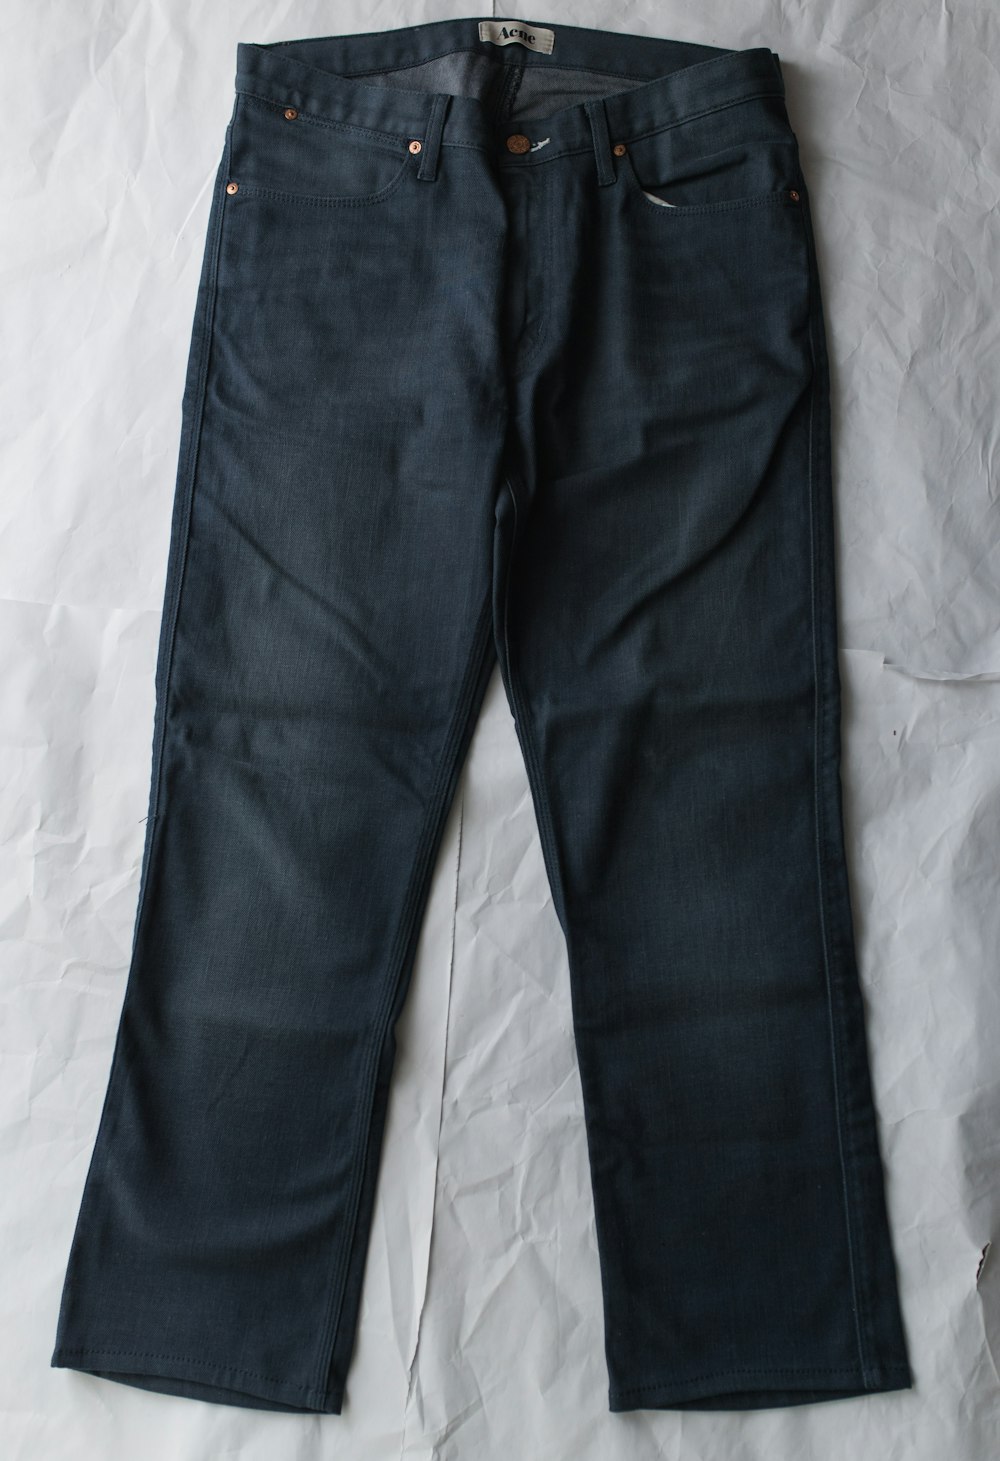 Astuce pour agrandir taille pantalon - Le blog StarOfService